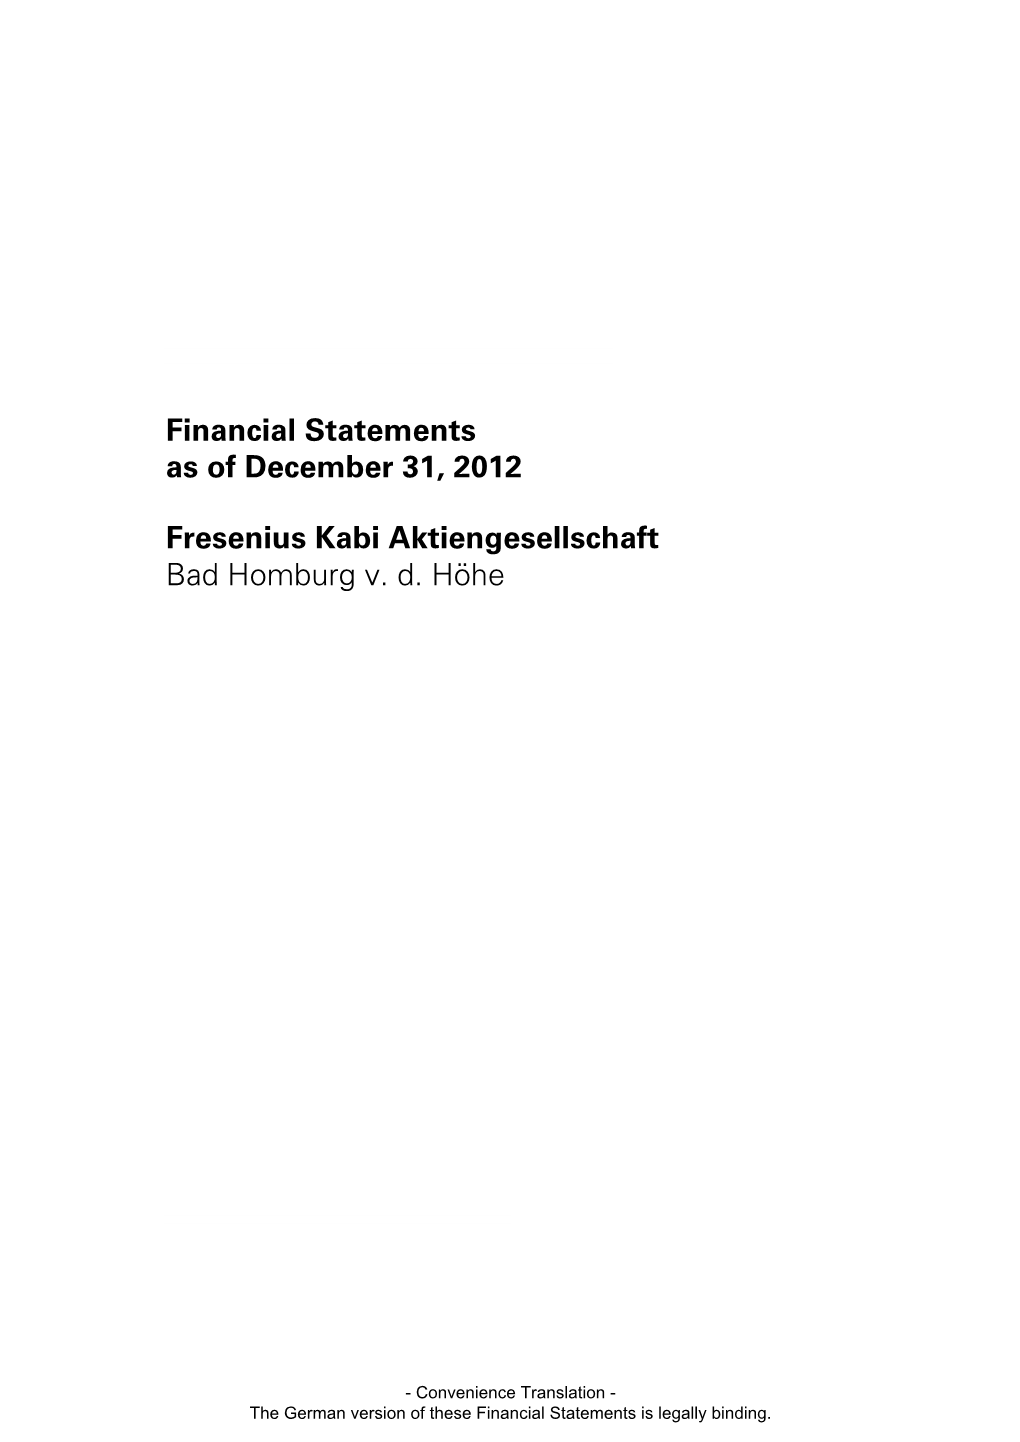 Financial Statements of Fresenius Kabi AG 2012